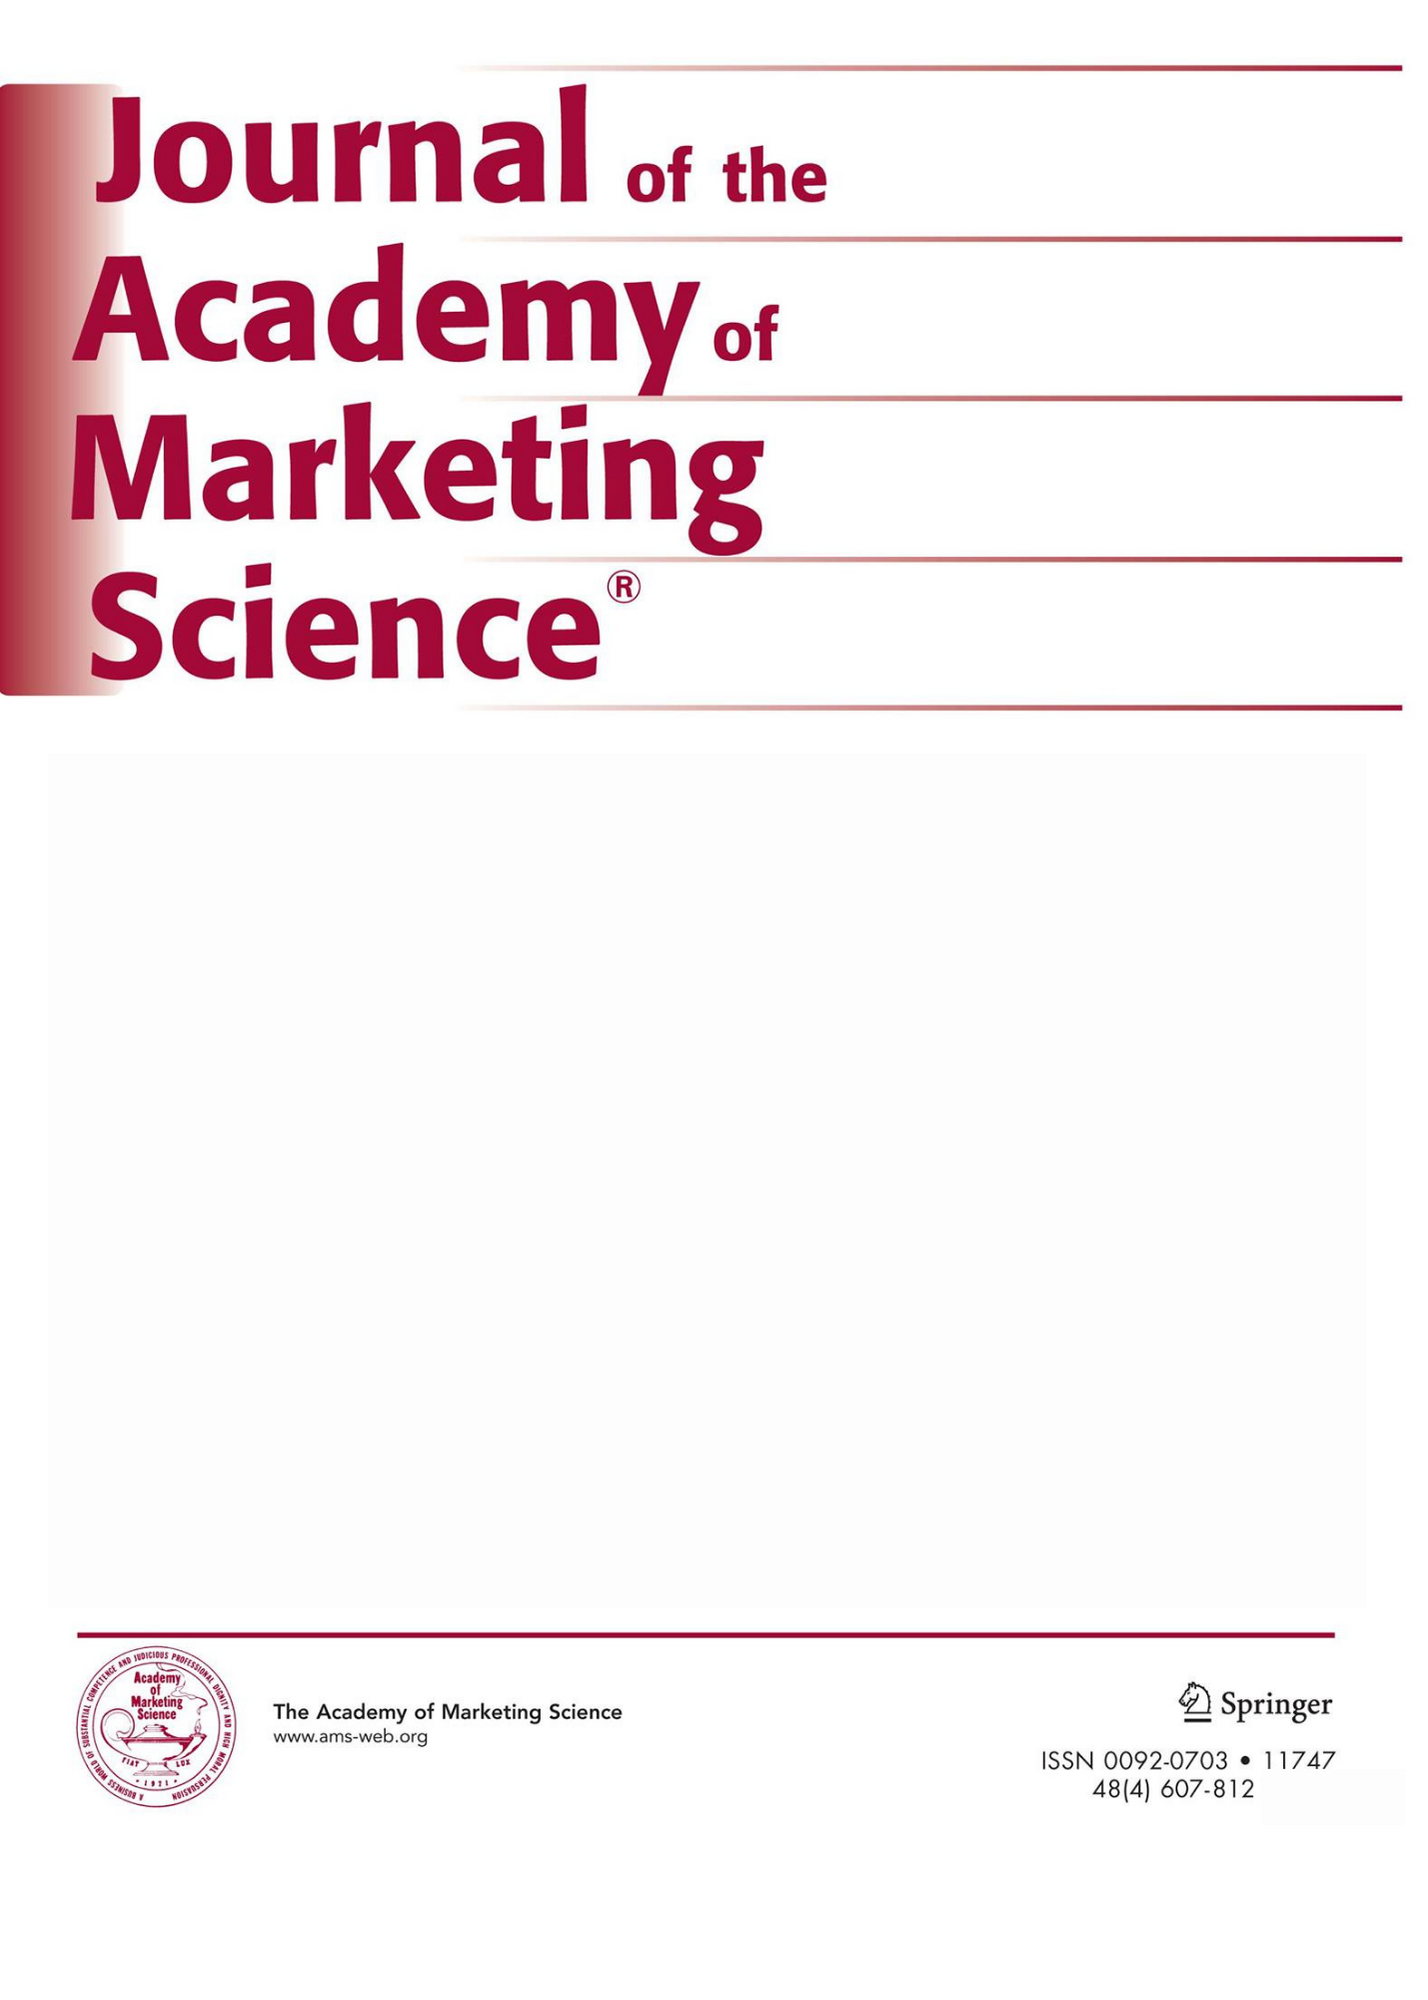 Academy of Marketing Science